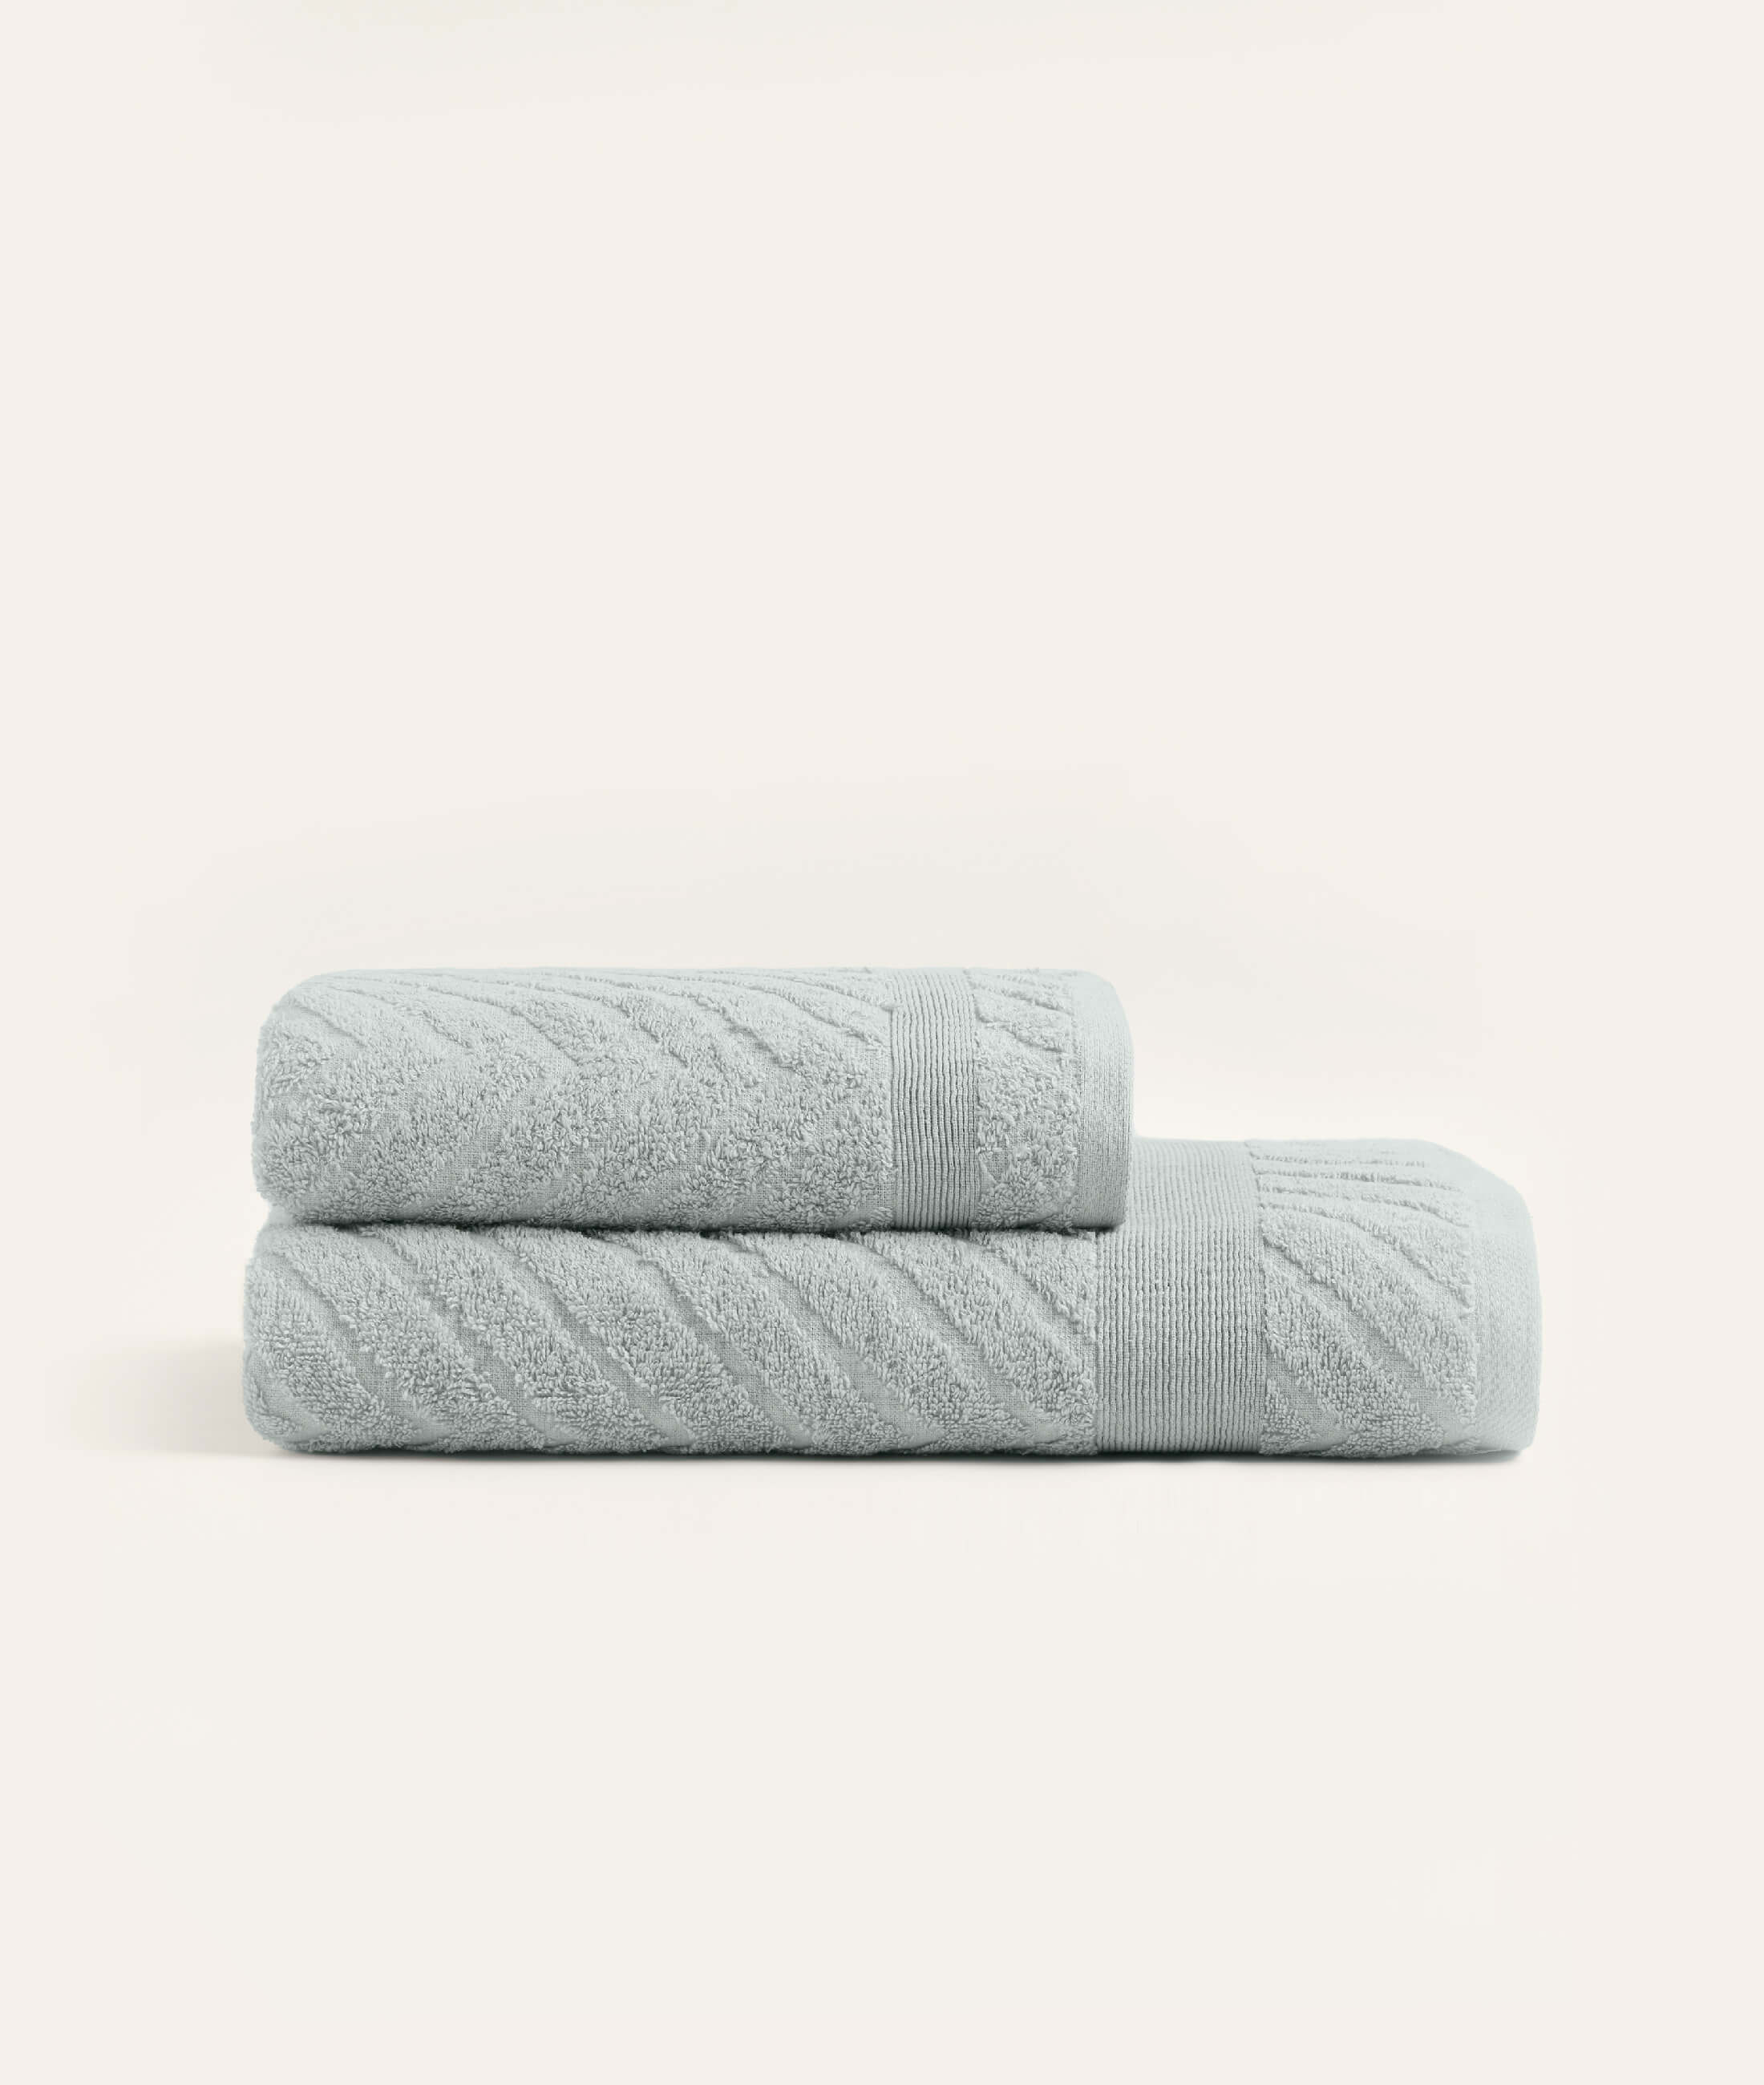 Lycian Jacquard Border Gray Set of 2 Towels Herringbone 1028A